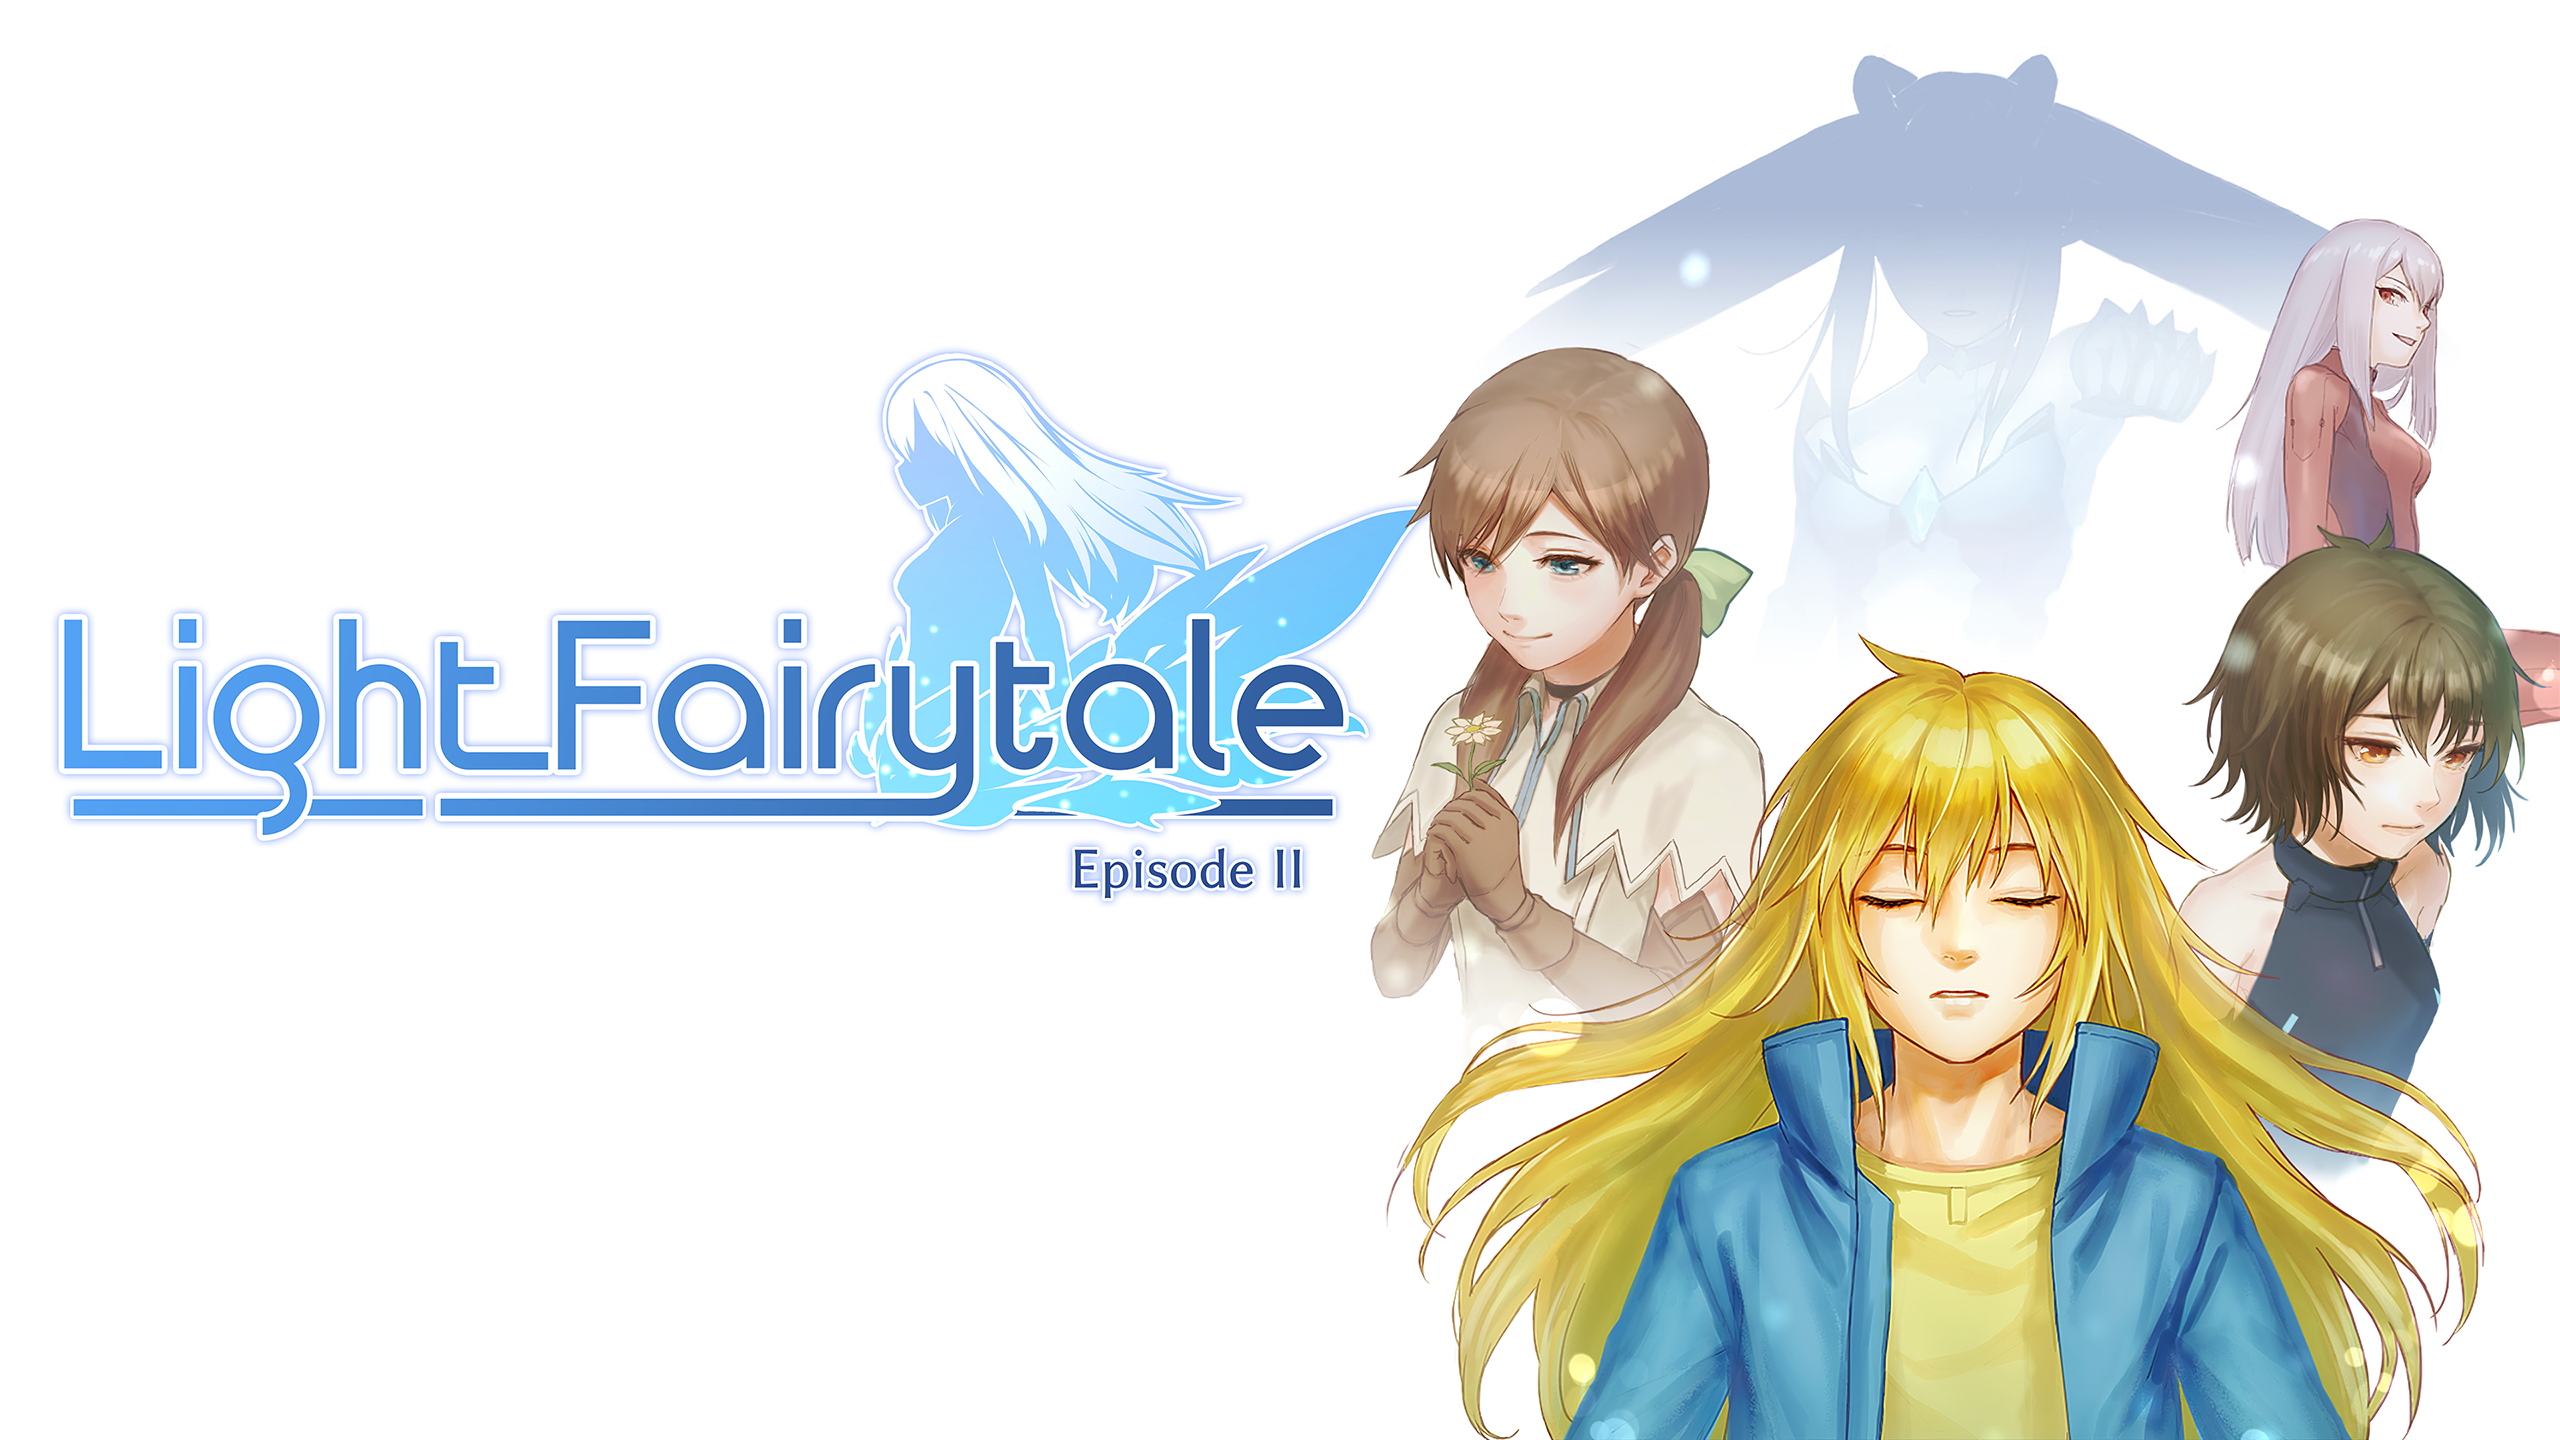 Episode 2 of Light Fairytale